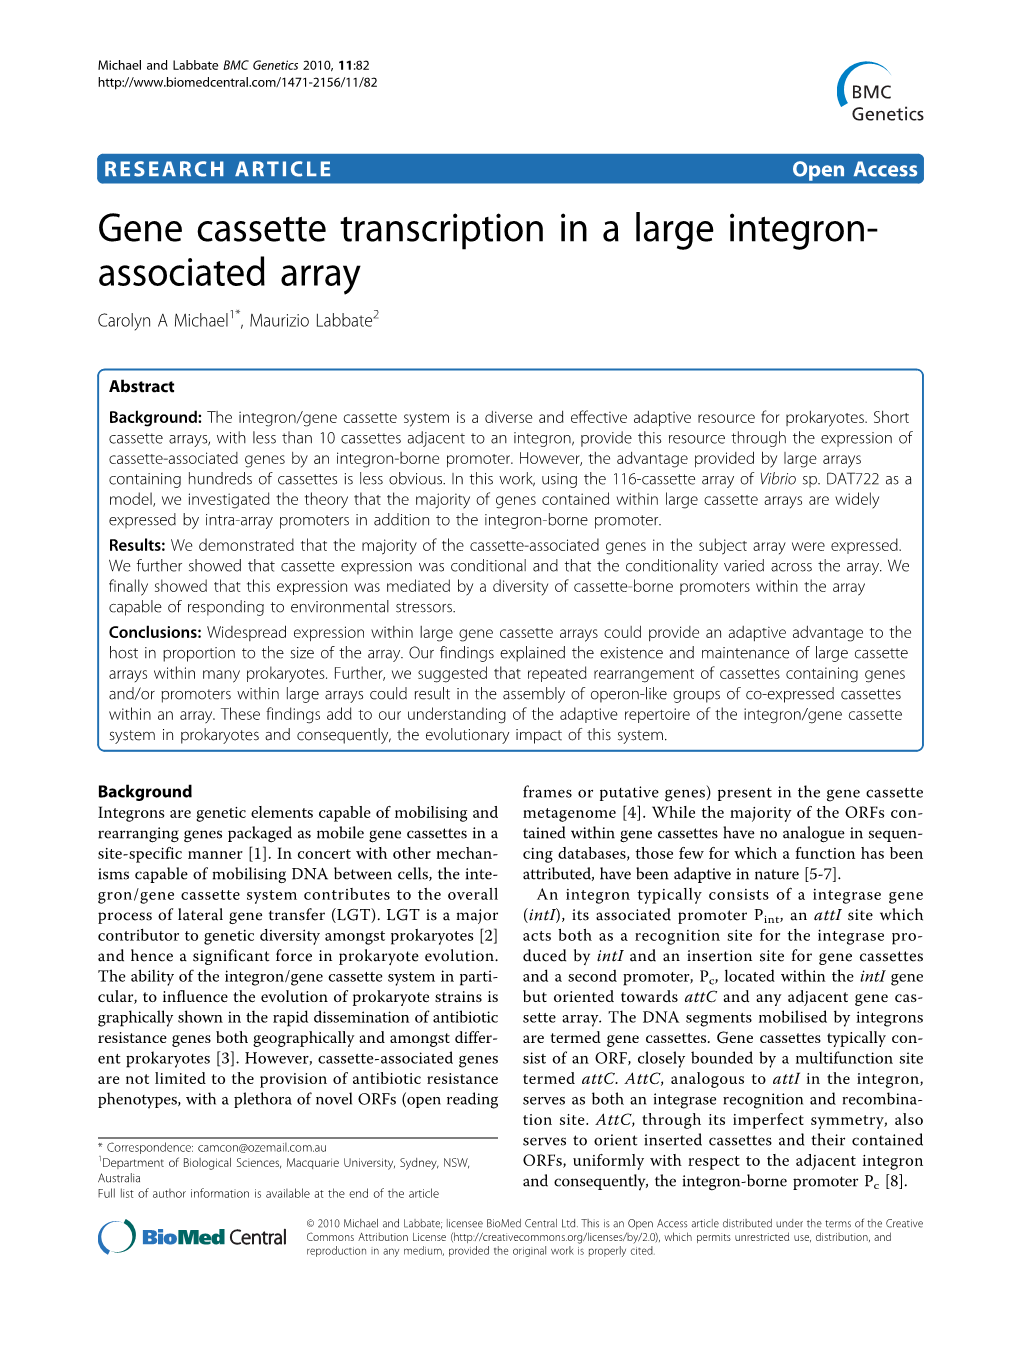 Gene Cassette Transcription in a Large Integron- Associated Array Carolyn a Michael1*, Maurizio Labbate2